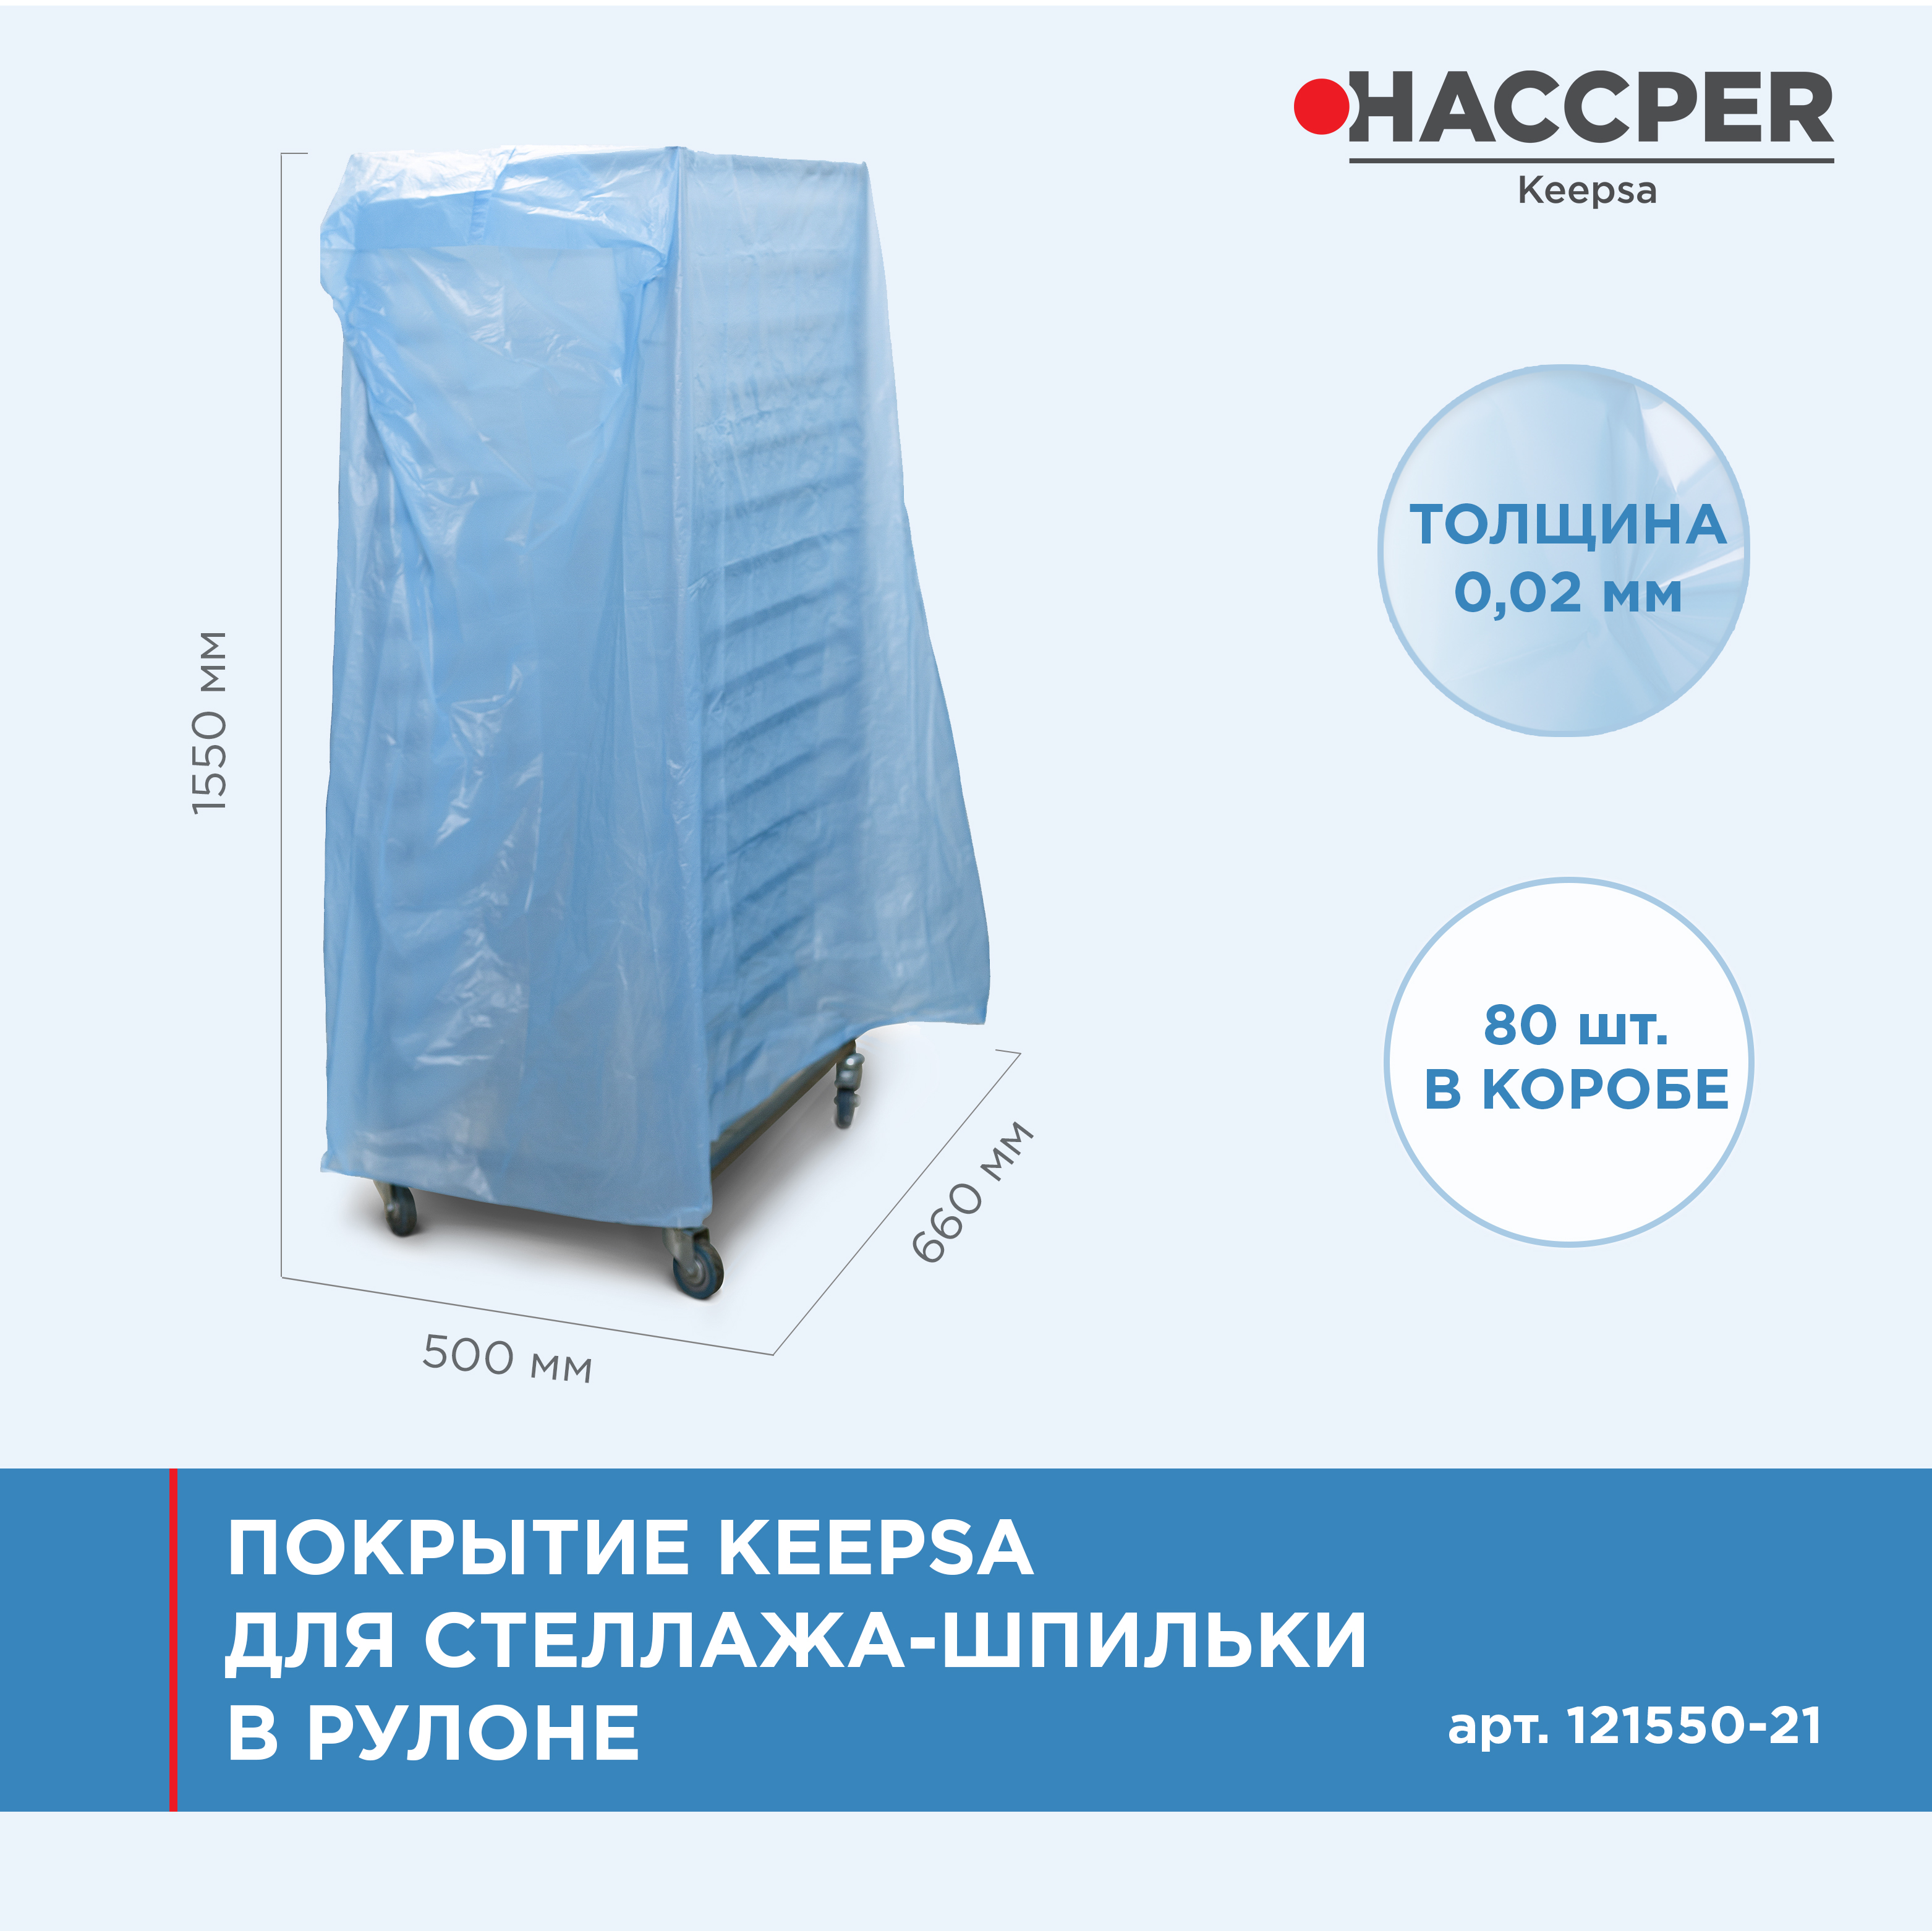 Покрытие HACCPER Keepsa для стеллажа-шпильки, 660х500х1550 мм